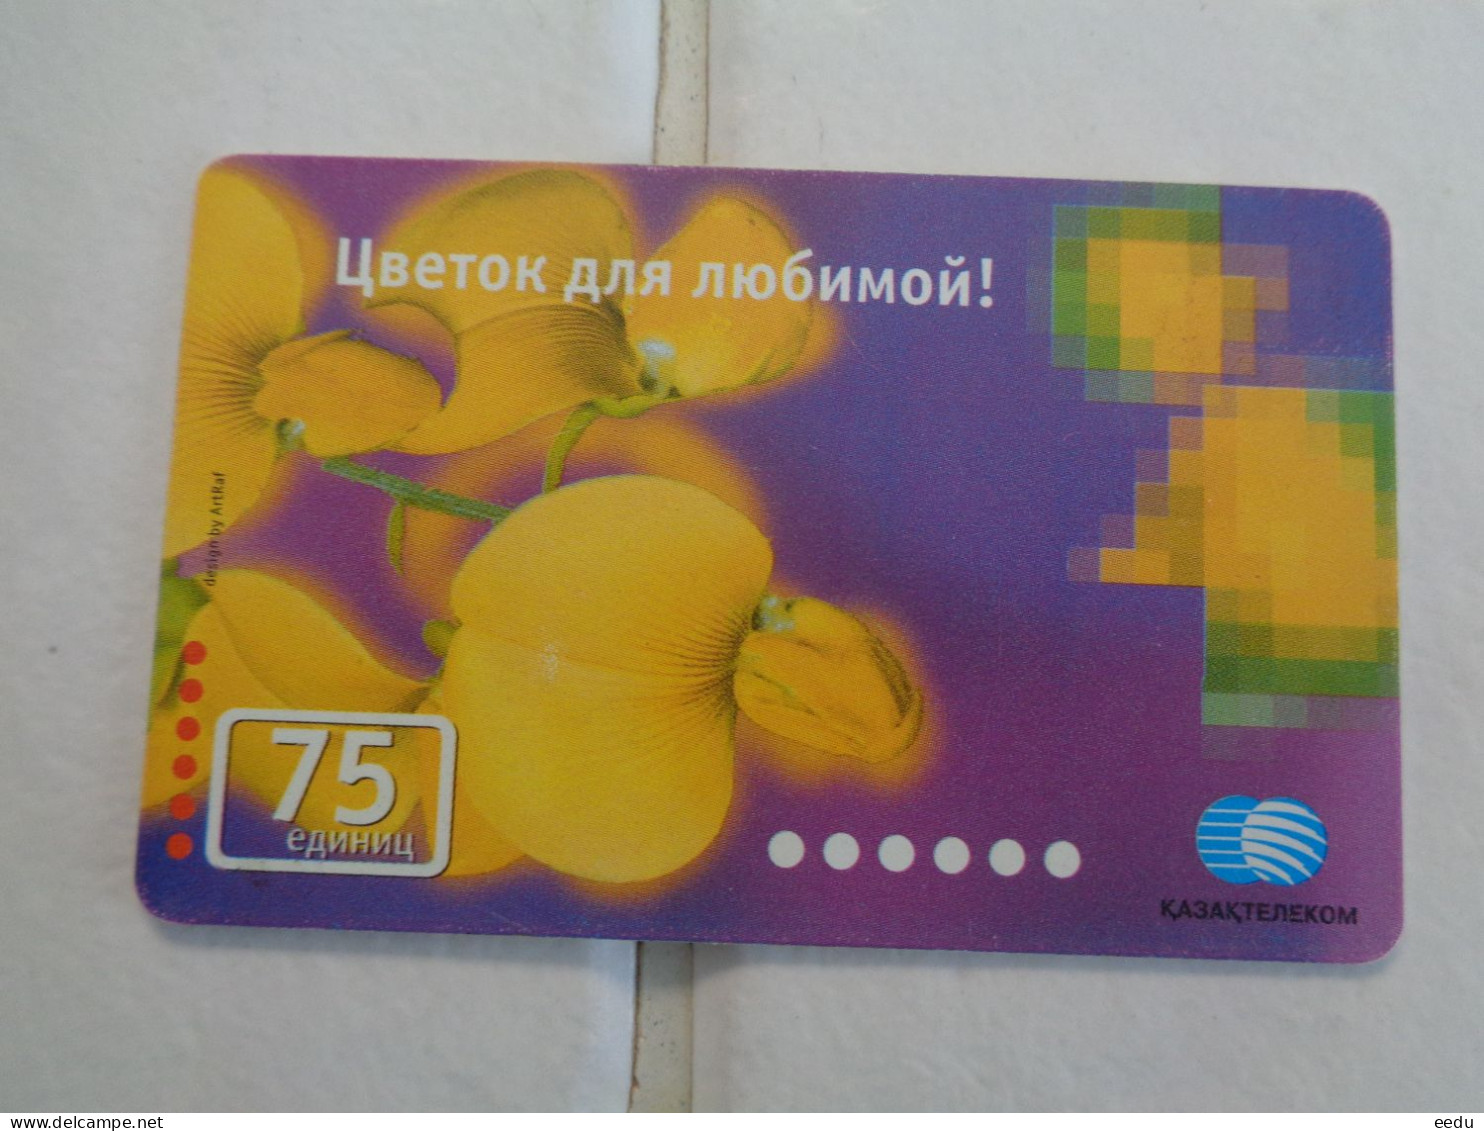 Kazakhstan Phonecard - Kazachstan